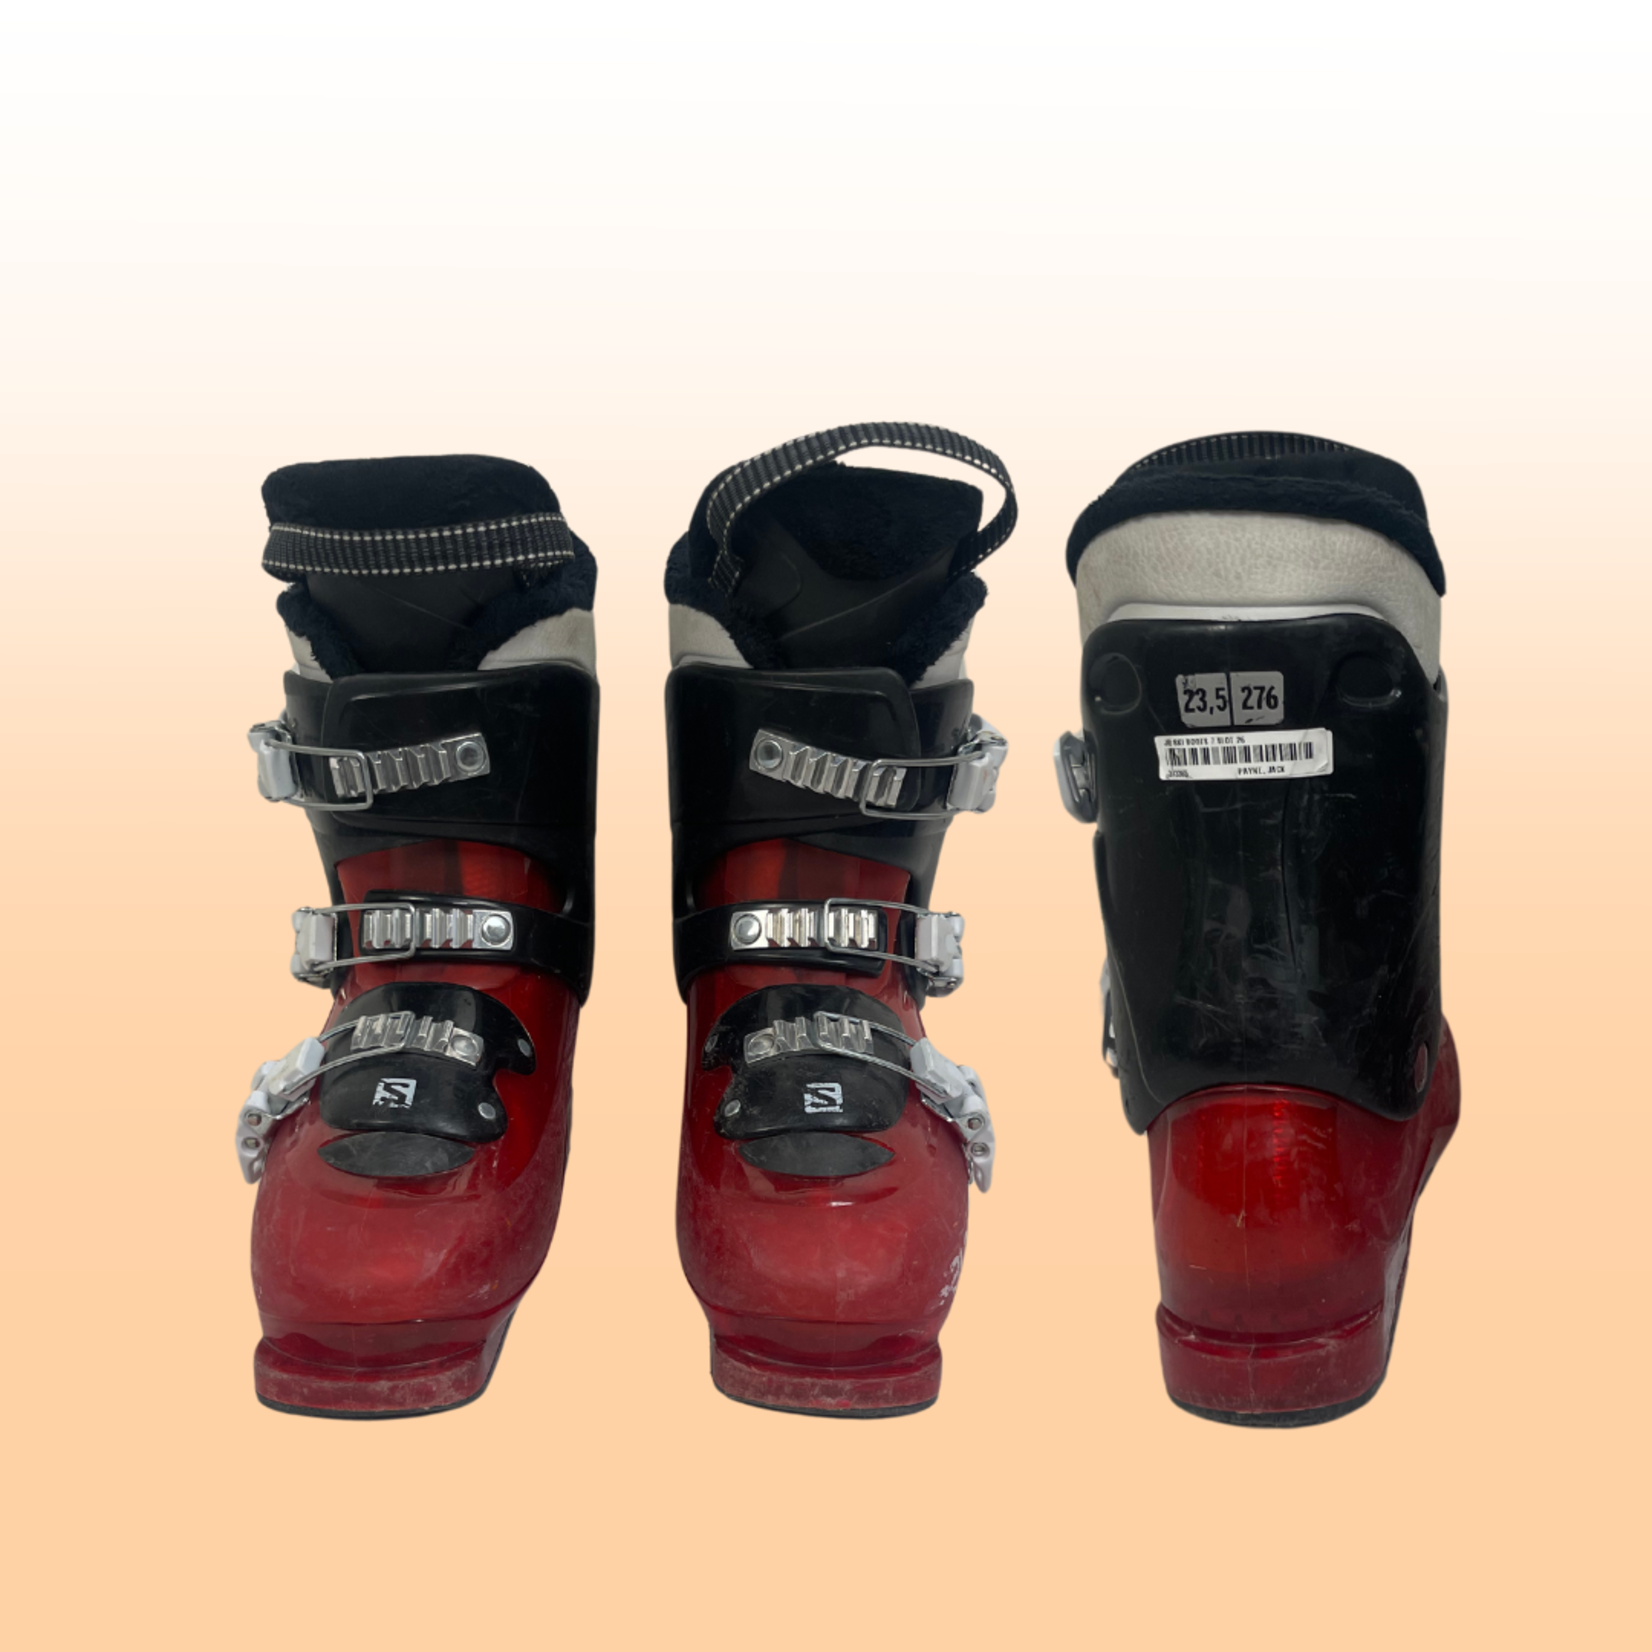 Salomon Salomon T3 Kids Ski Boots, Size 26.5